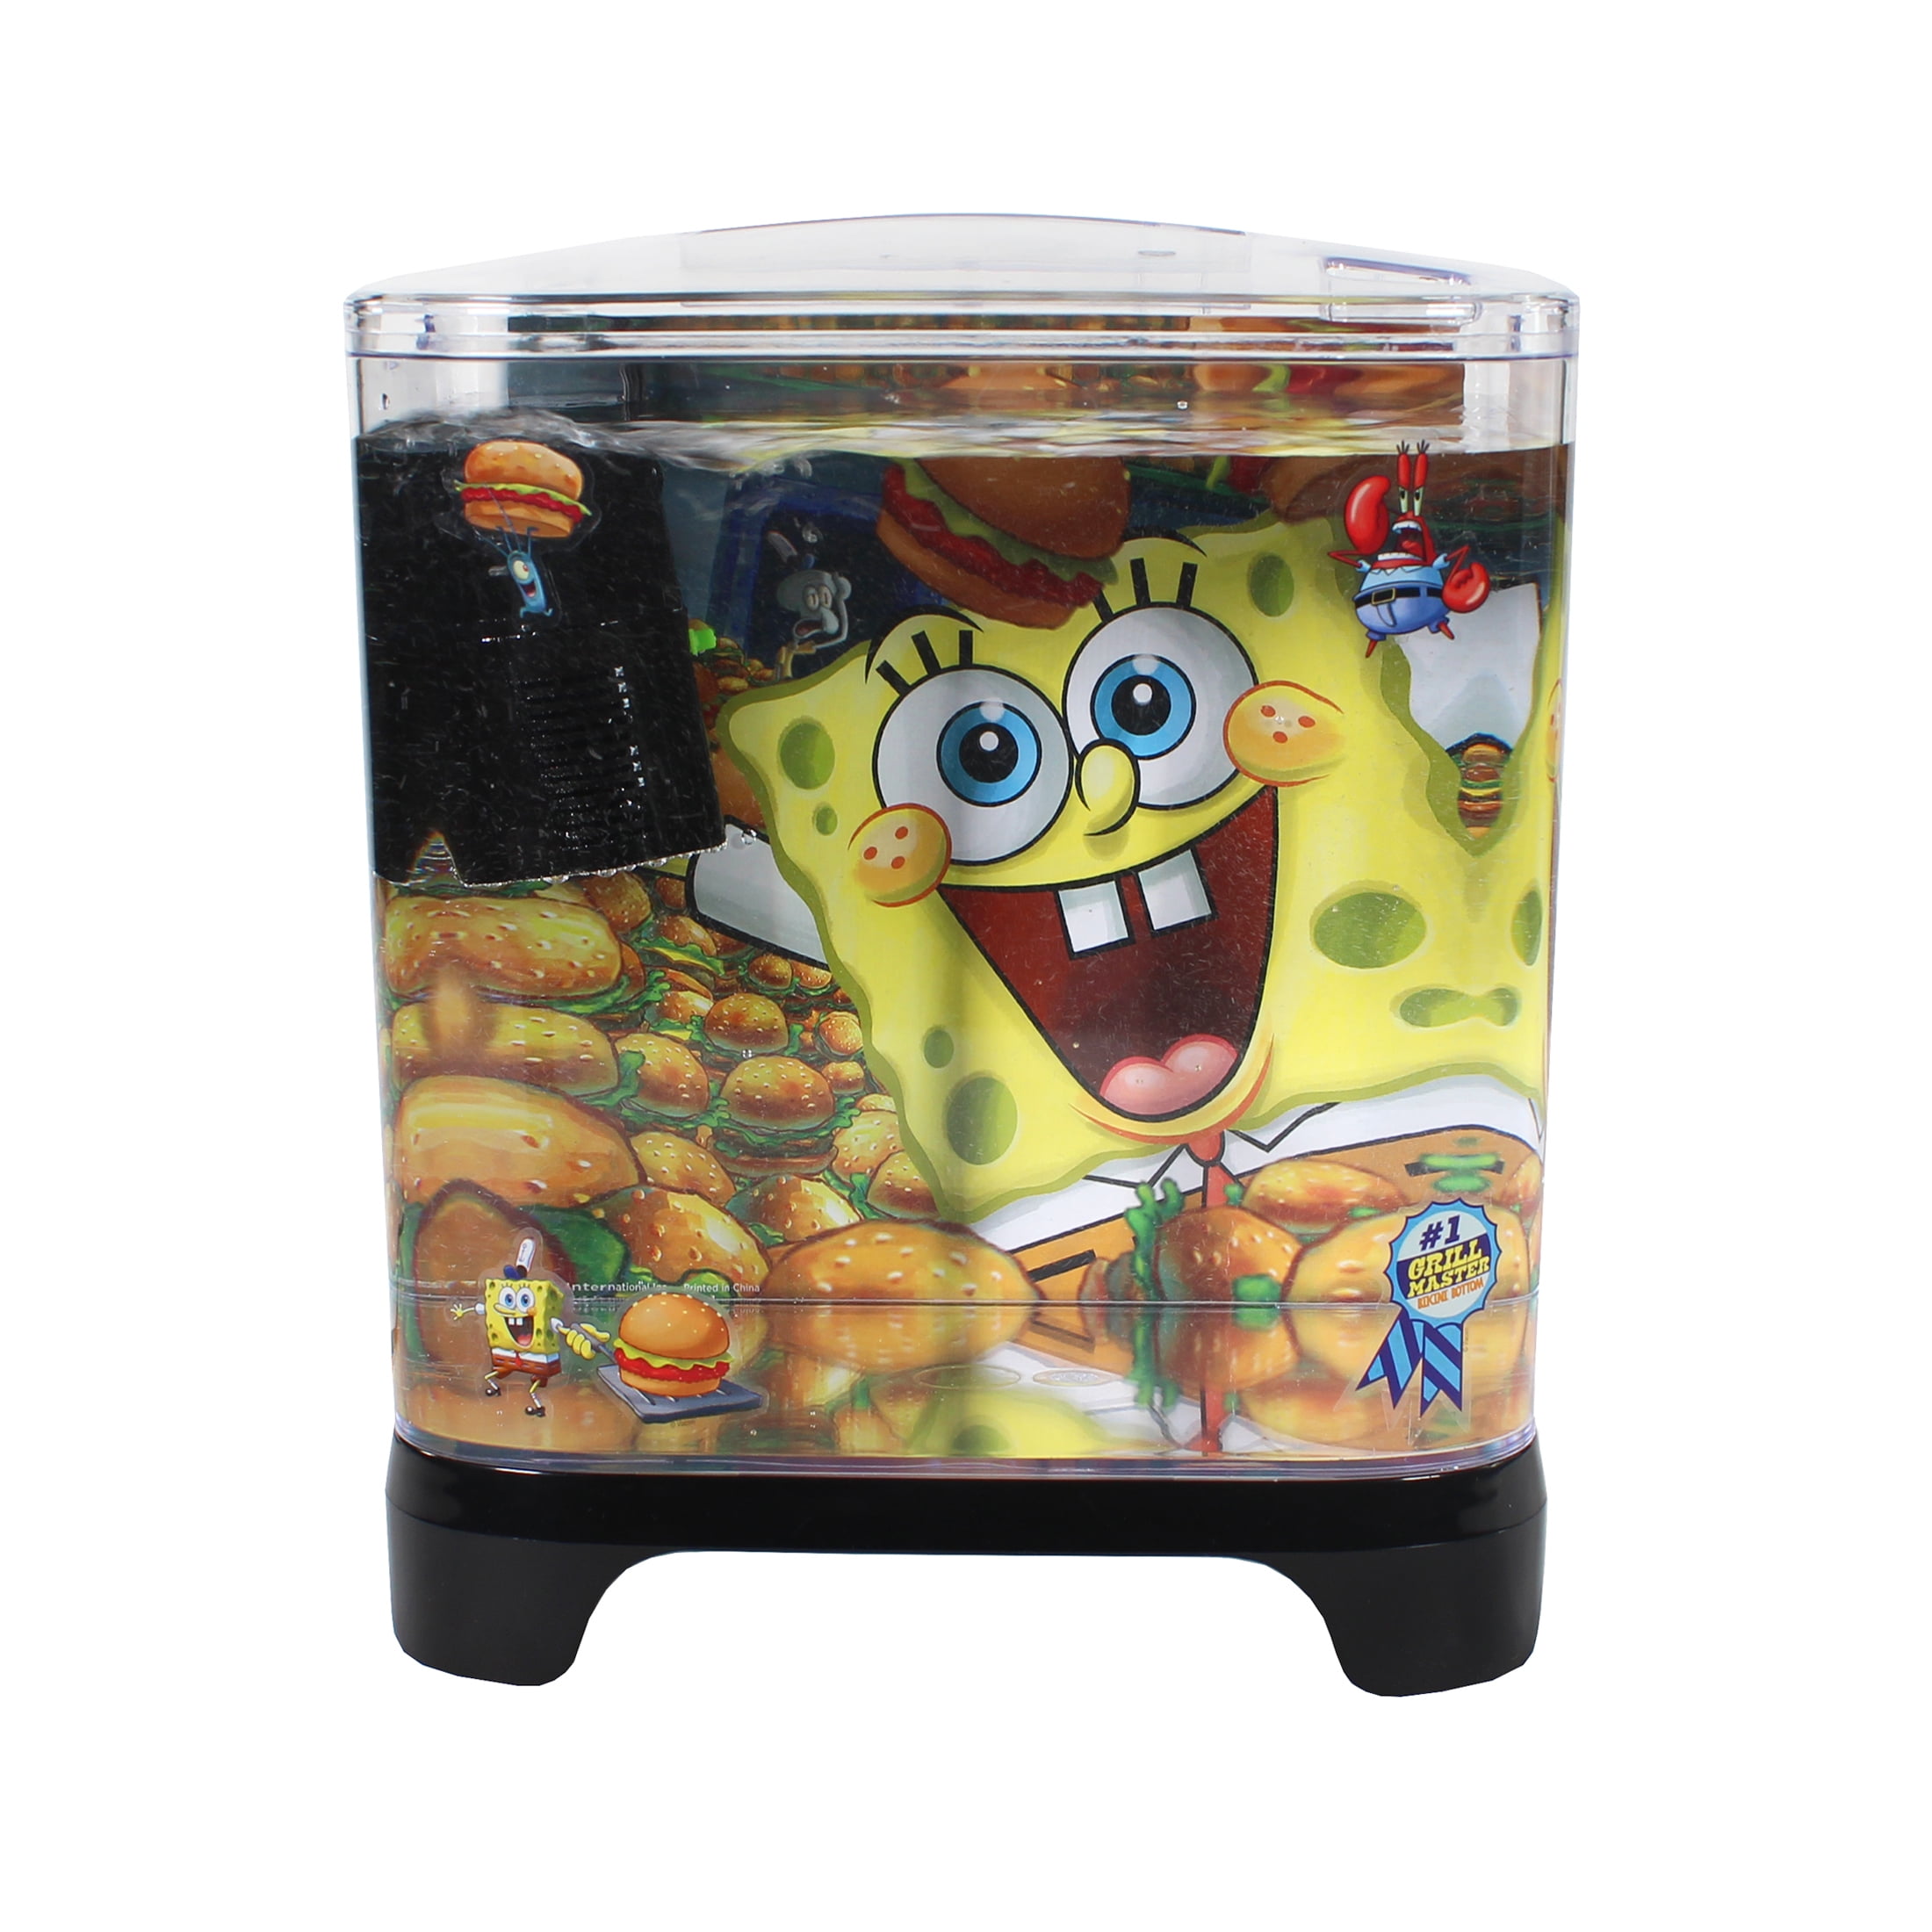 SpongeBob Squarepants Storage & Containers for Kids